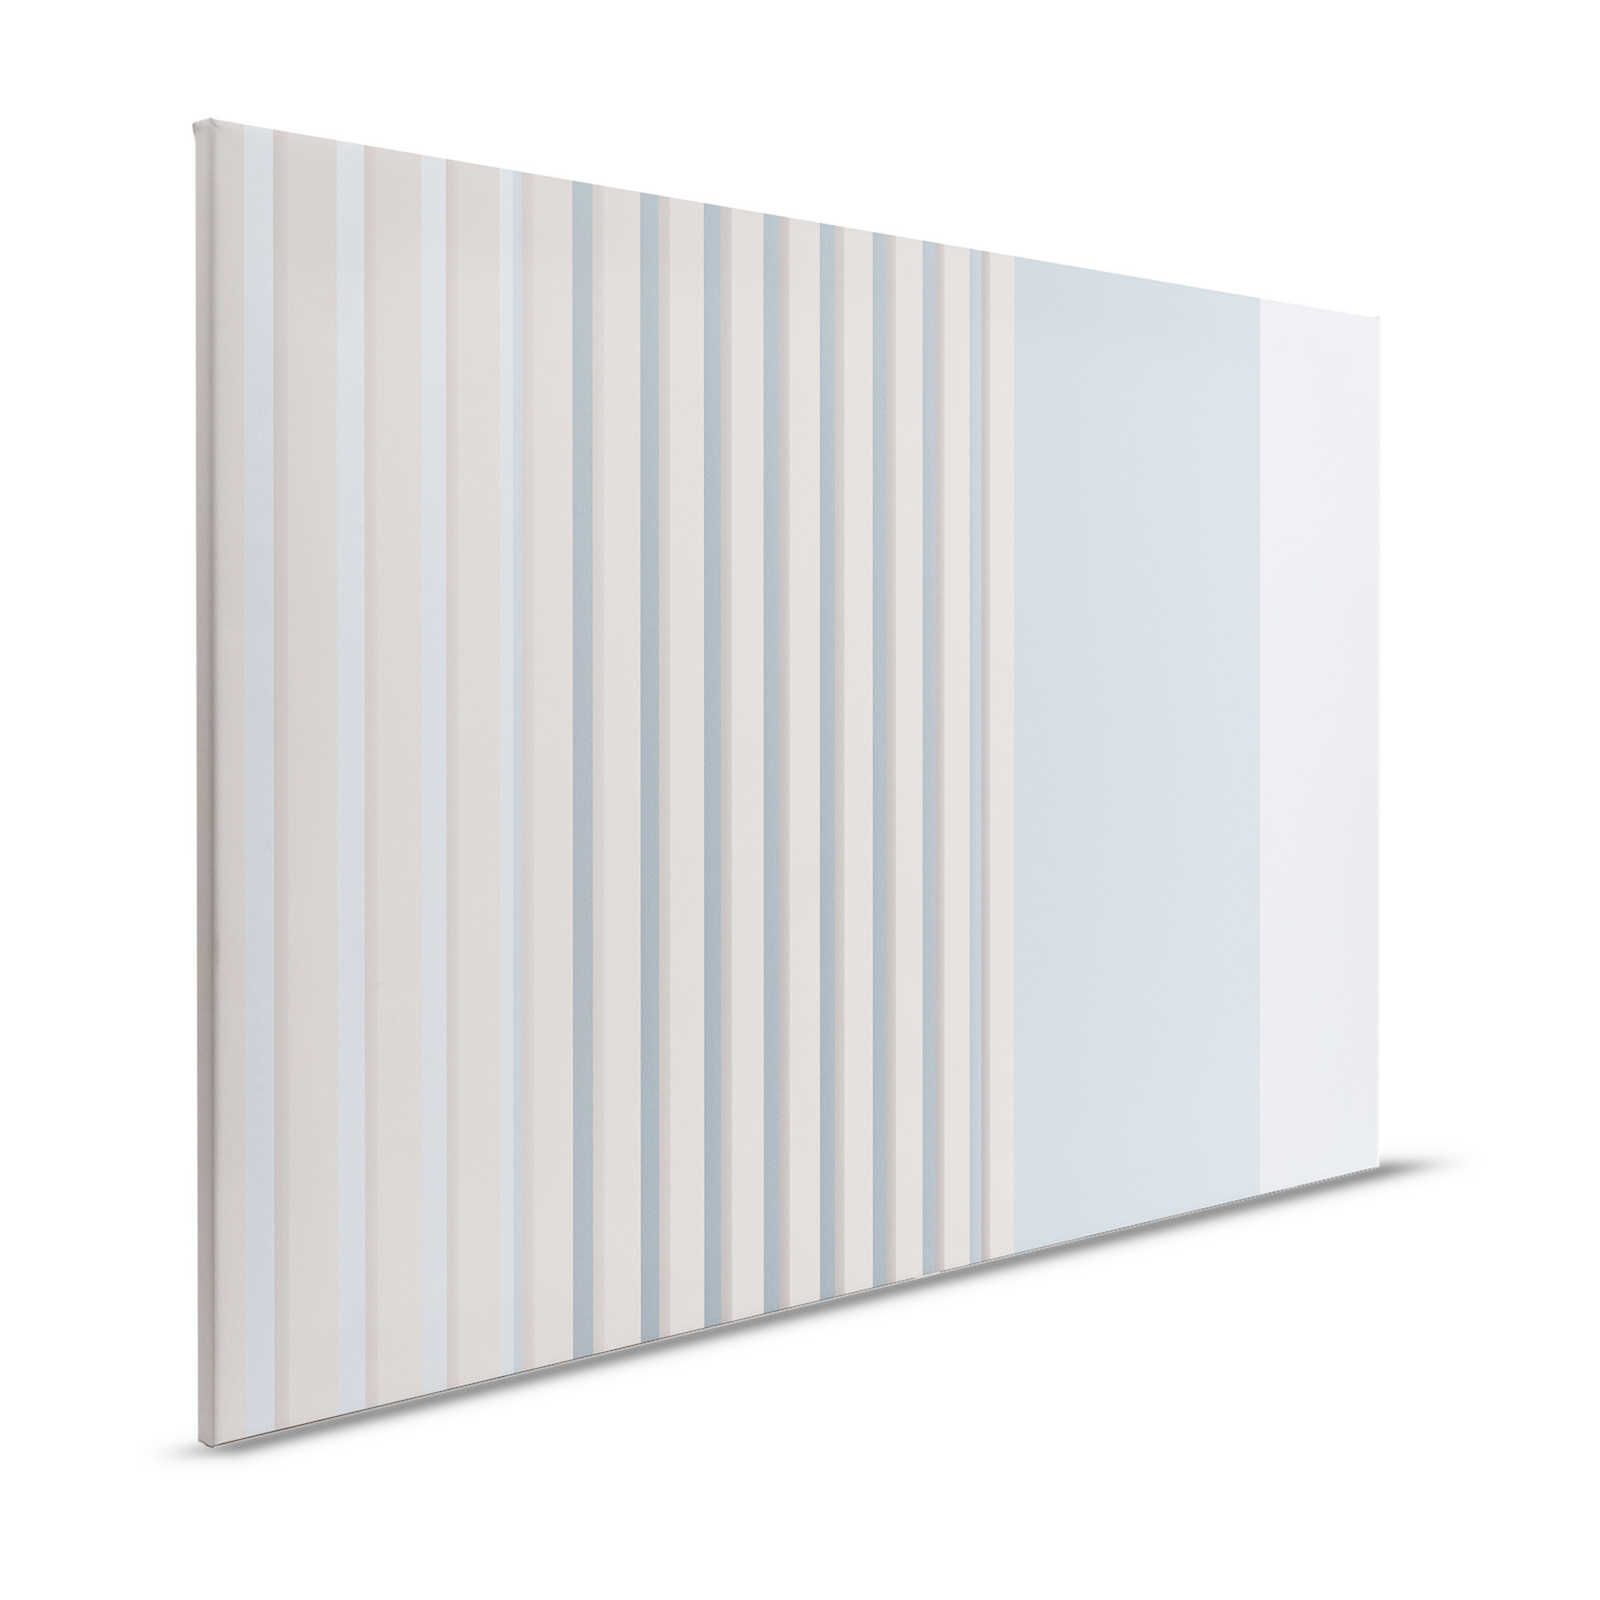 Illusion Room 2 - Canvas painting 3D Stripe Design in Blue & Grey - 1.20 m x 0.80 m
